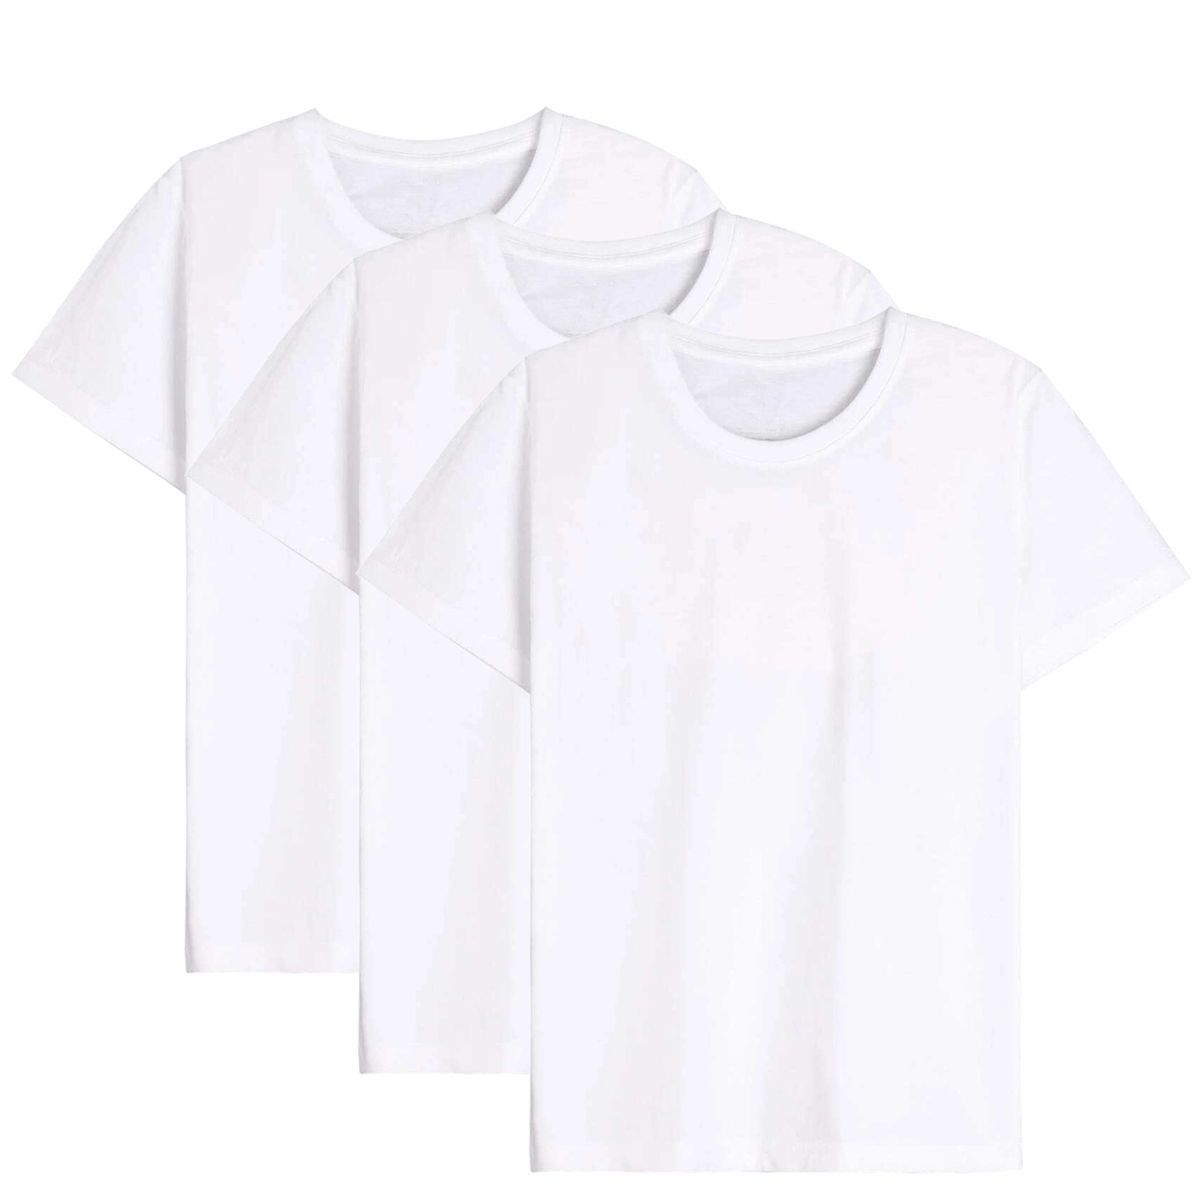 3 Pack Plain Unisex T-Shirt Round Neck-White | Shop Today. Get it ...